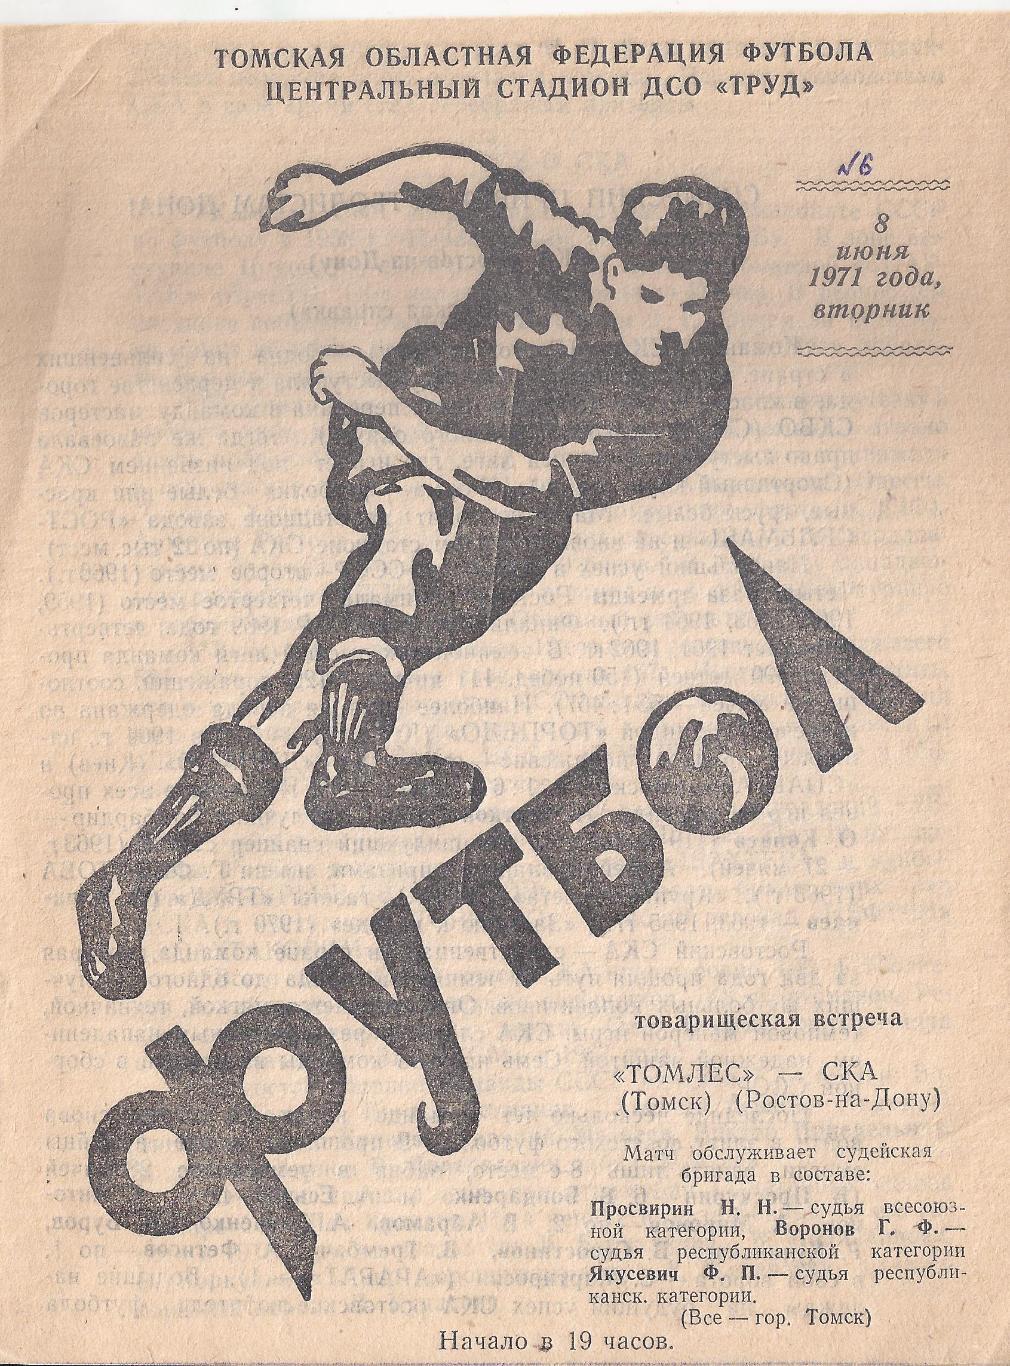 1971 - Томлес Томск - СКА Ростов-на-Дону